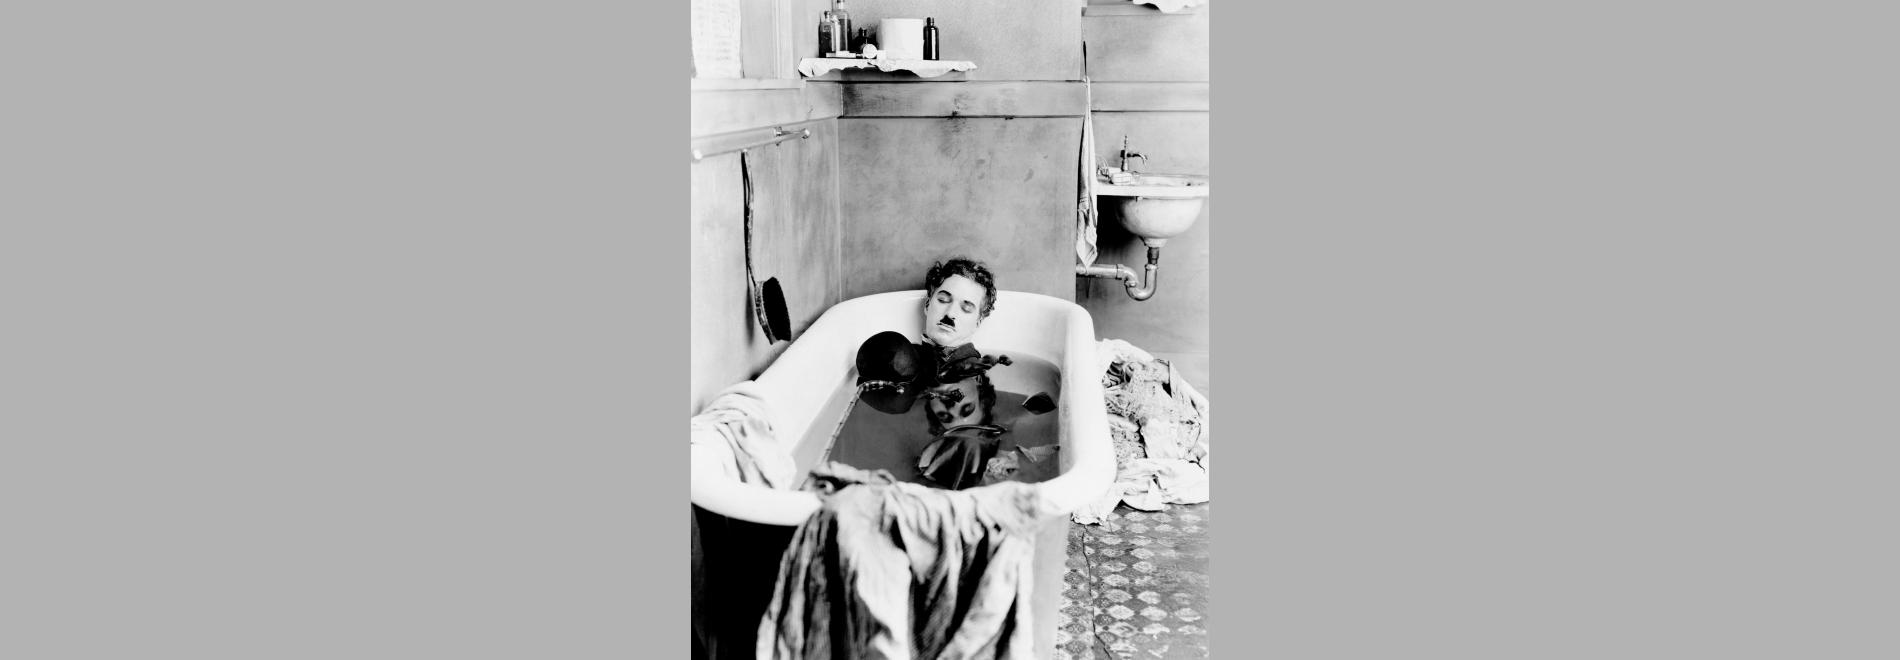 Curtmetratges de Charles Chaplin